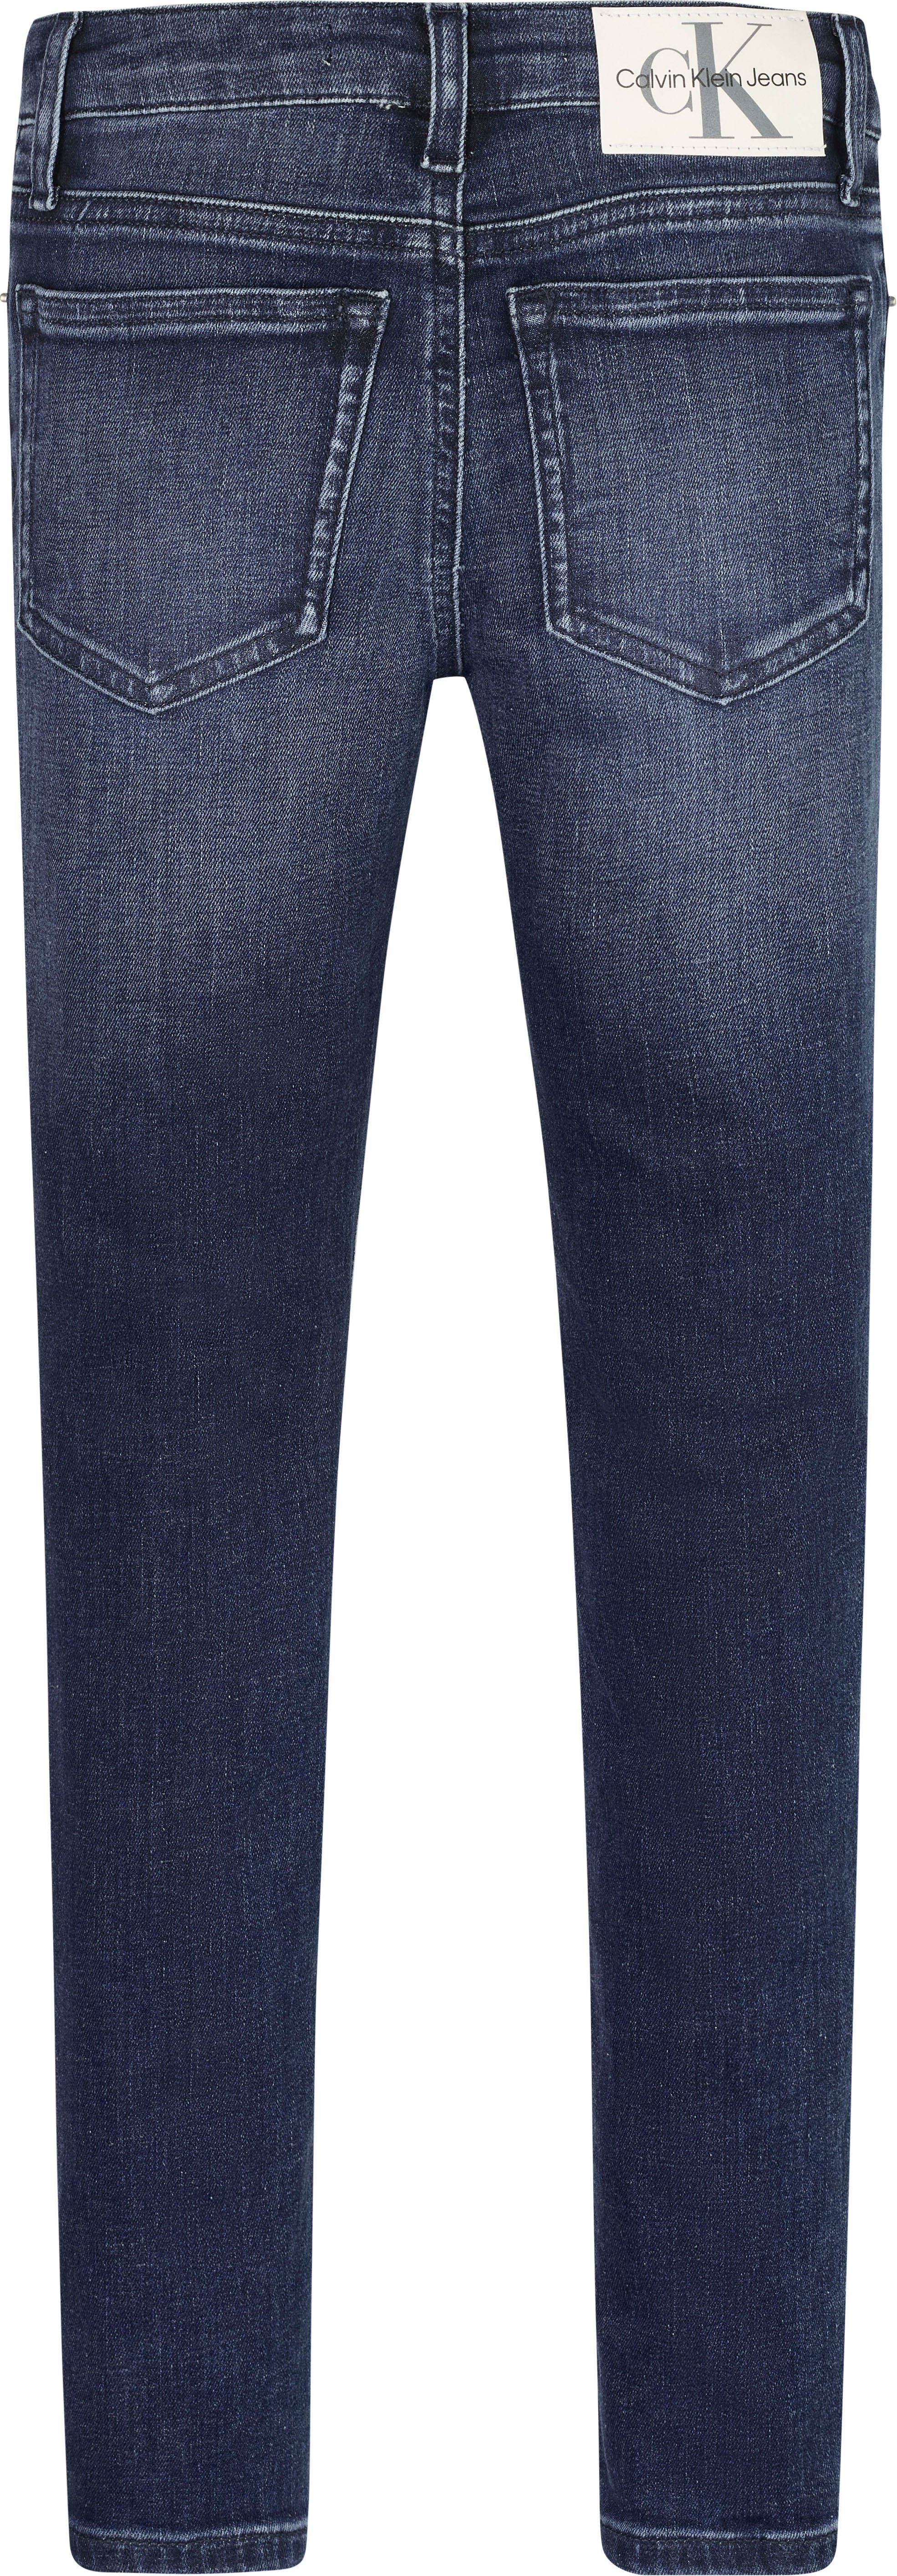 ESS Calvin Jeans DARK SKINNY MR BLUE Klein Skinny-fit-Jeans